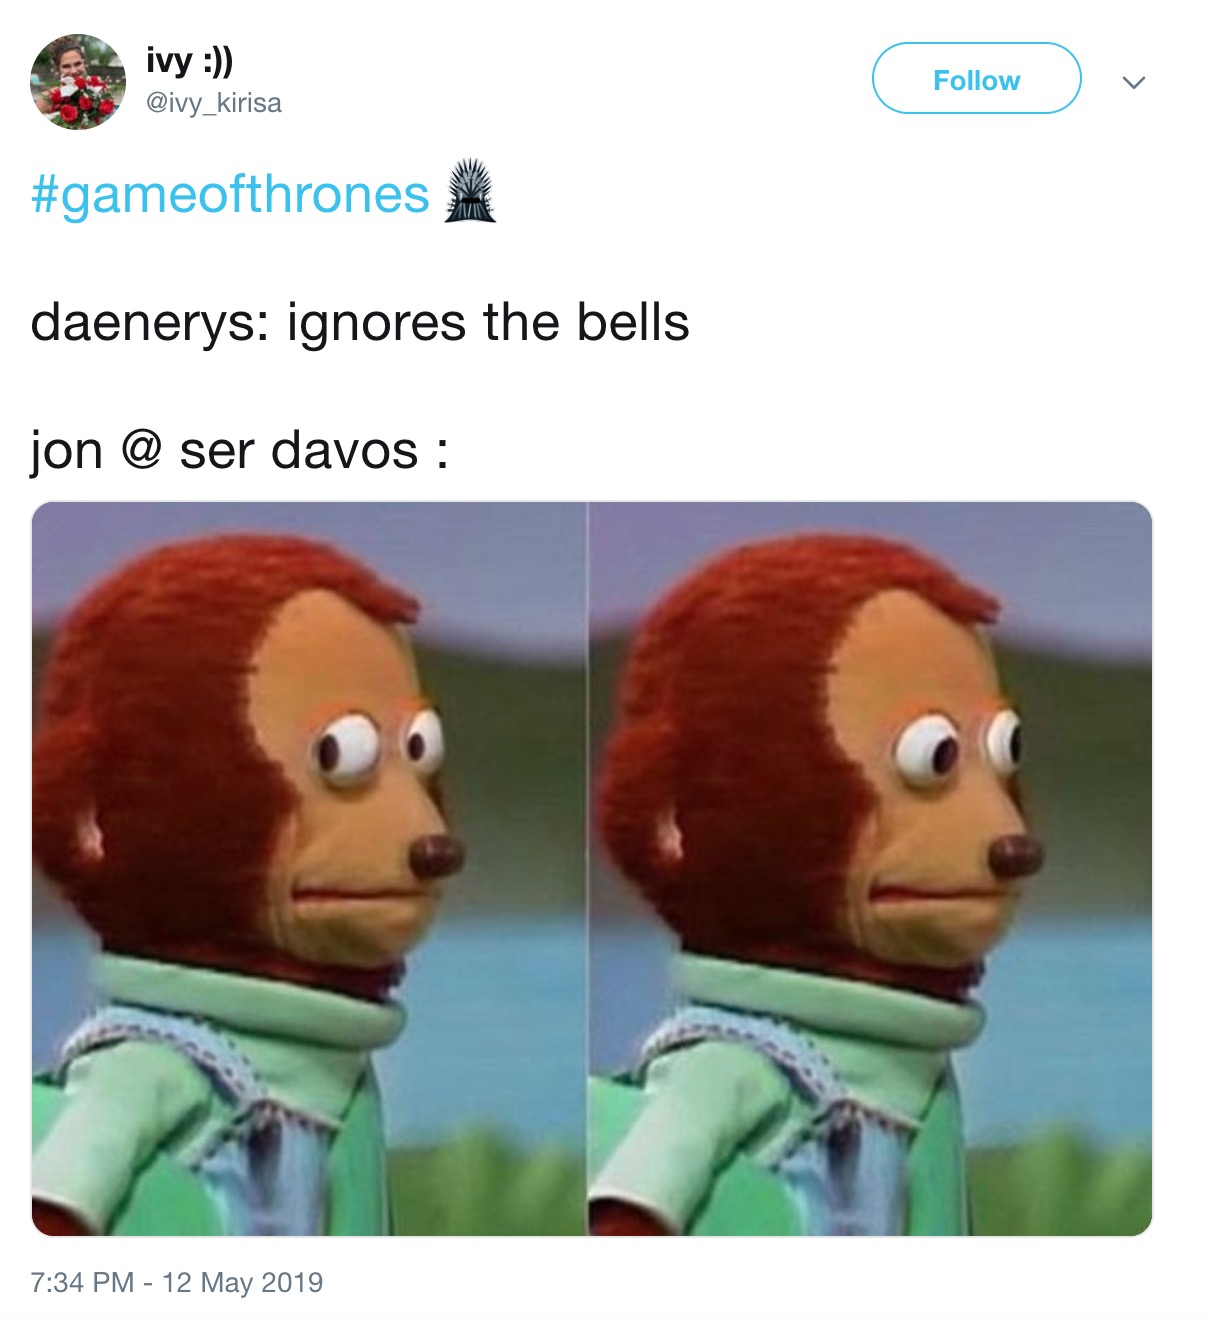 Game of Thrones Season 8 Episode 5 memes - Meme - ivy daenerys ignores the bells jon @ ser davos